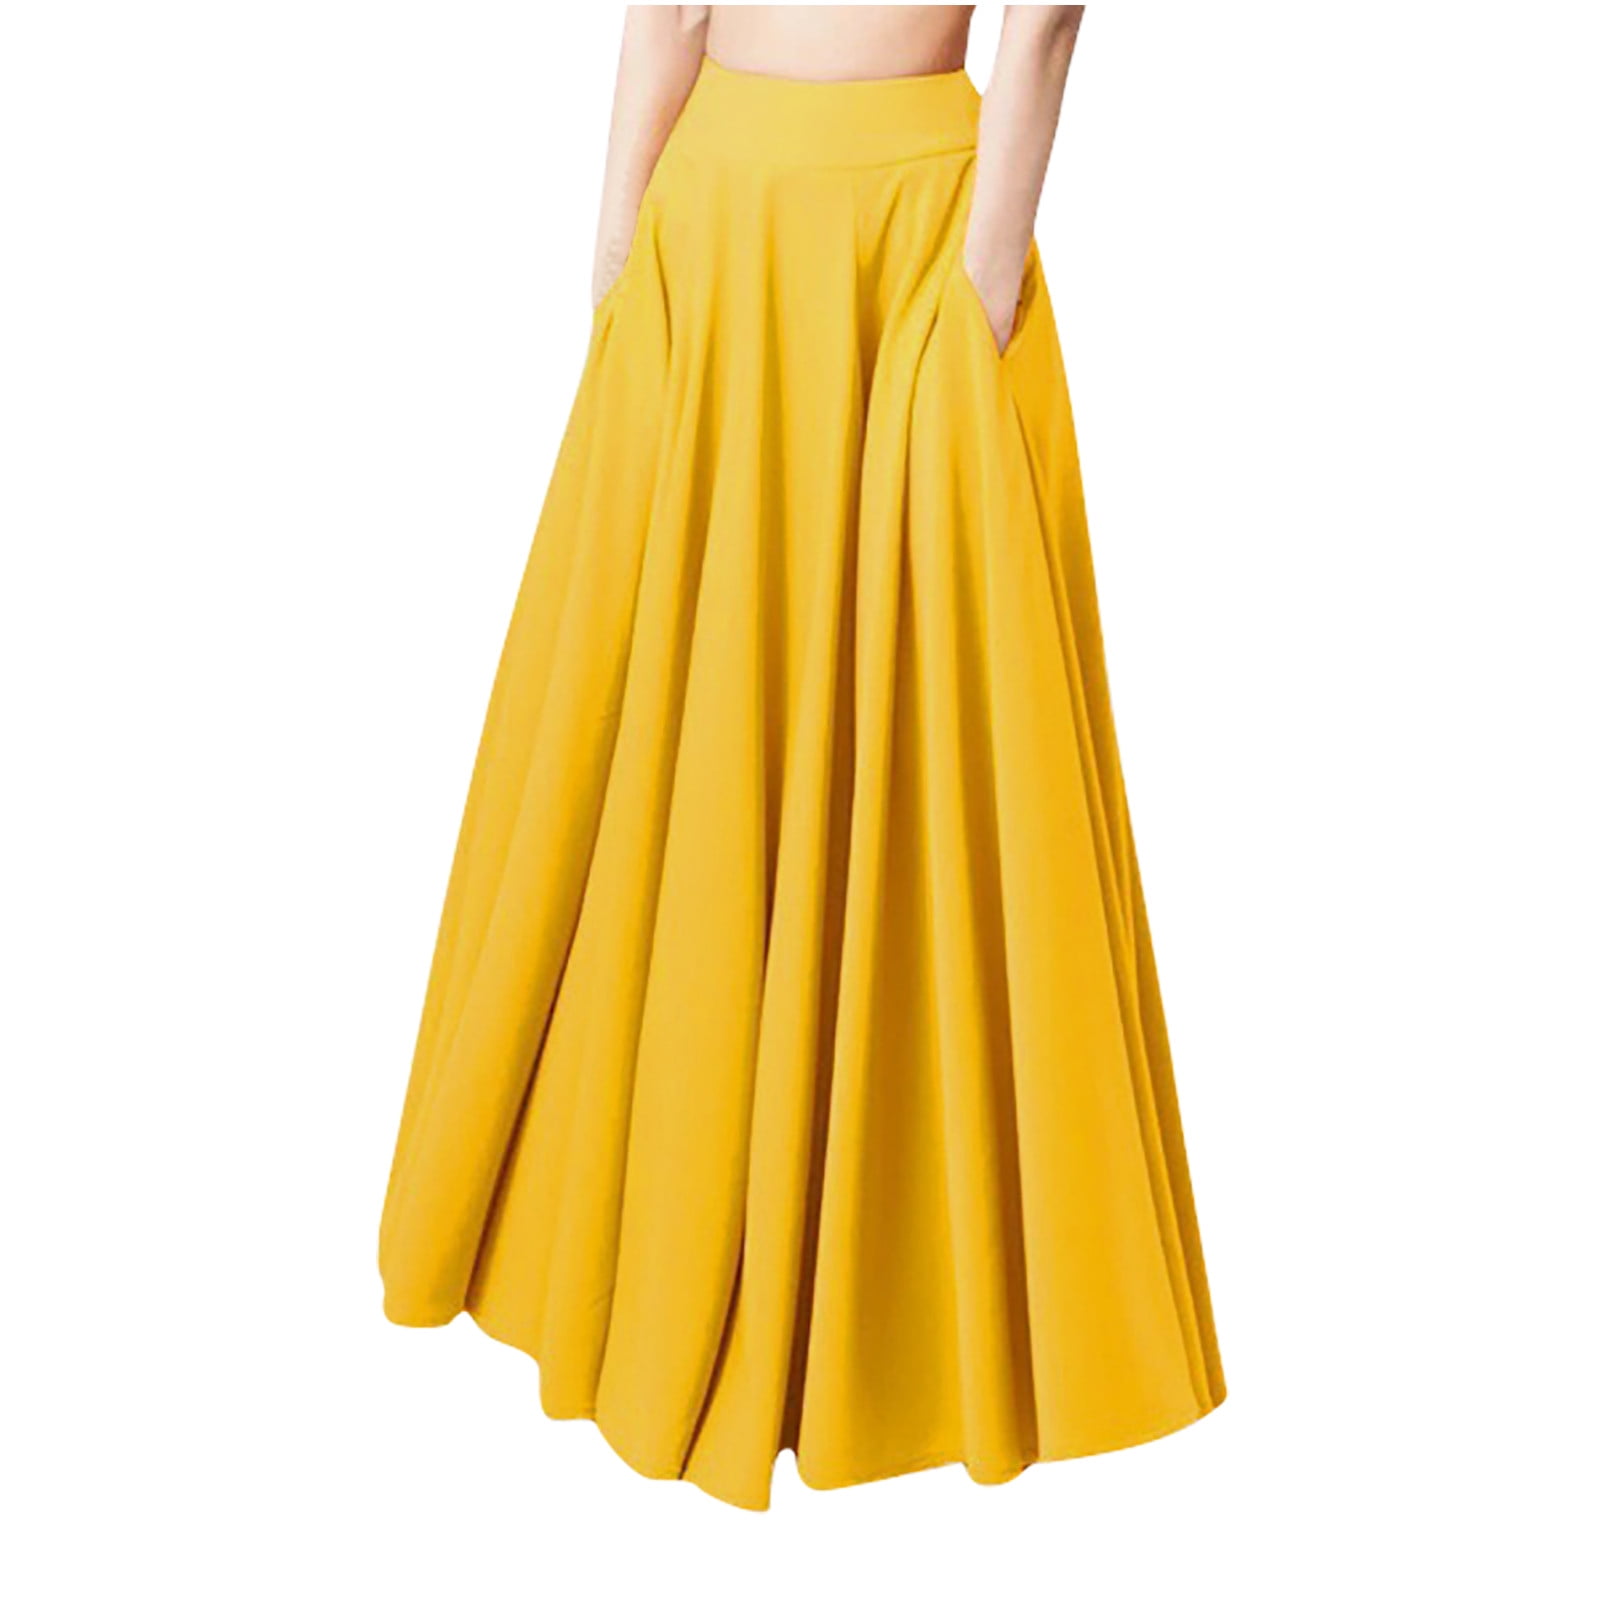 Women's High Waist Skirt Casual Loose Ruffle Skirt Solid Color Flowy ...